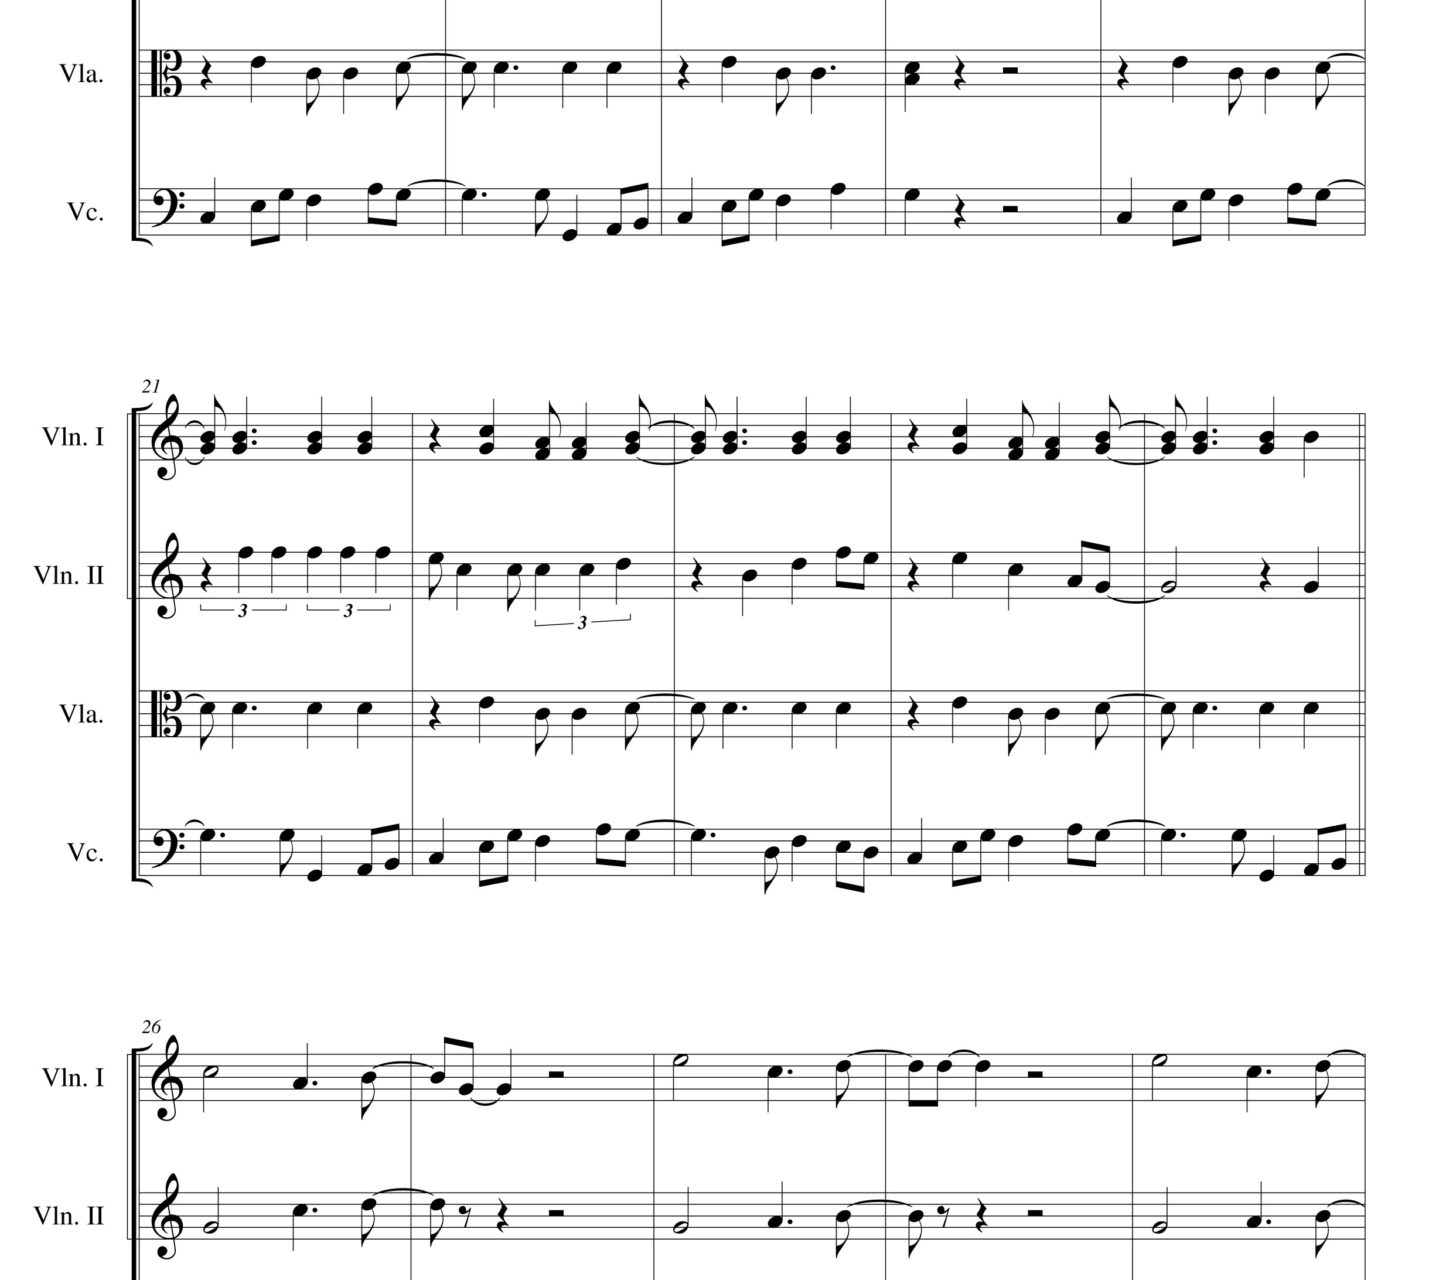 La Bamba Sheet music - Los Lobos - for String Quartet - Violin - Viola -  Cello